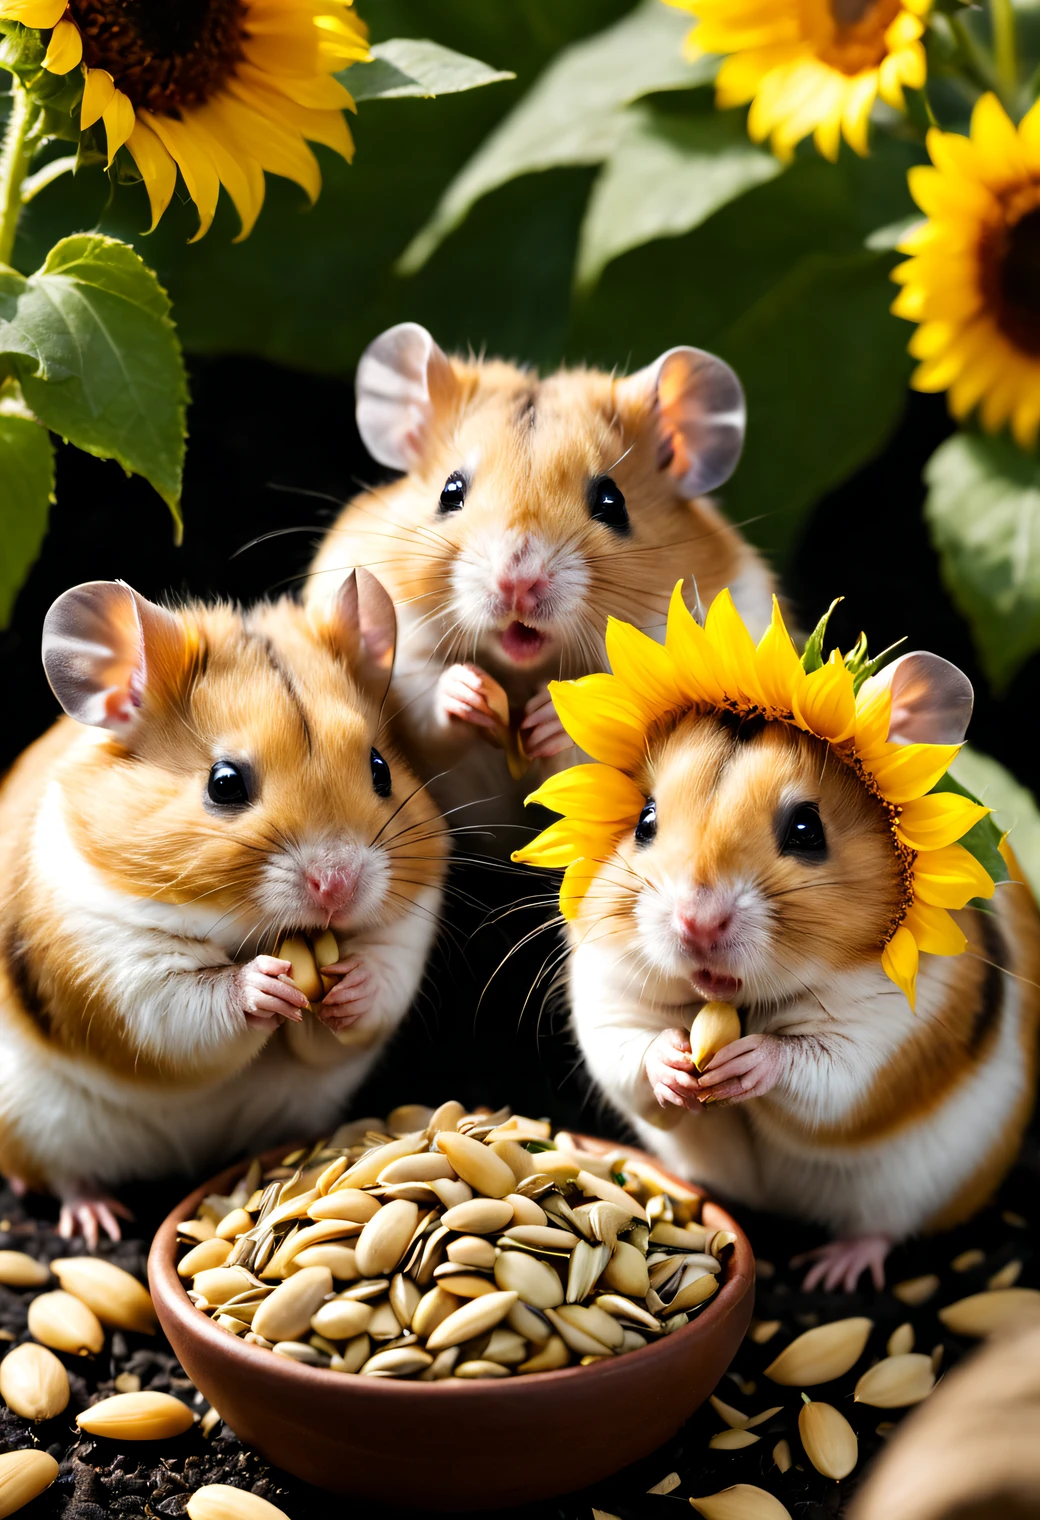 Cute hamster eating sunflower seeds